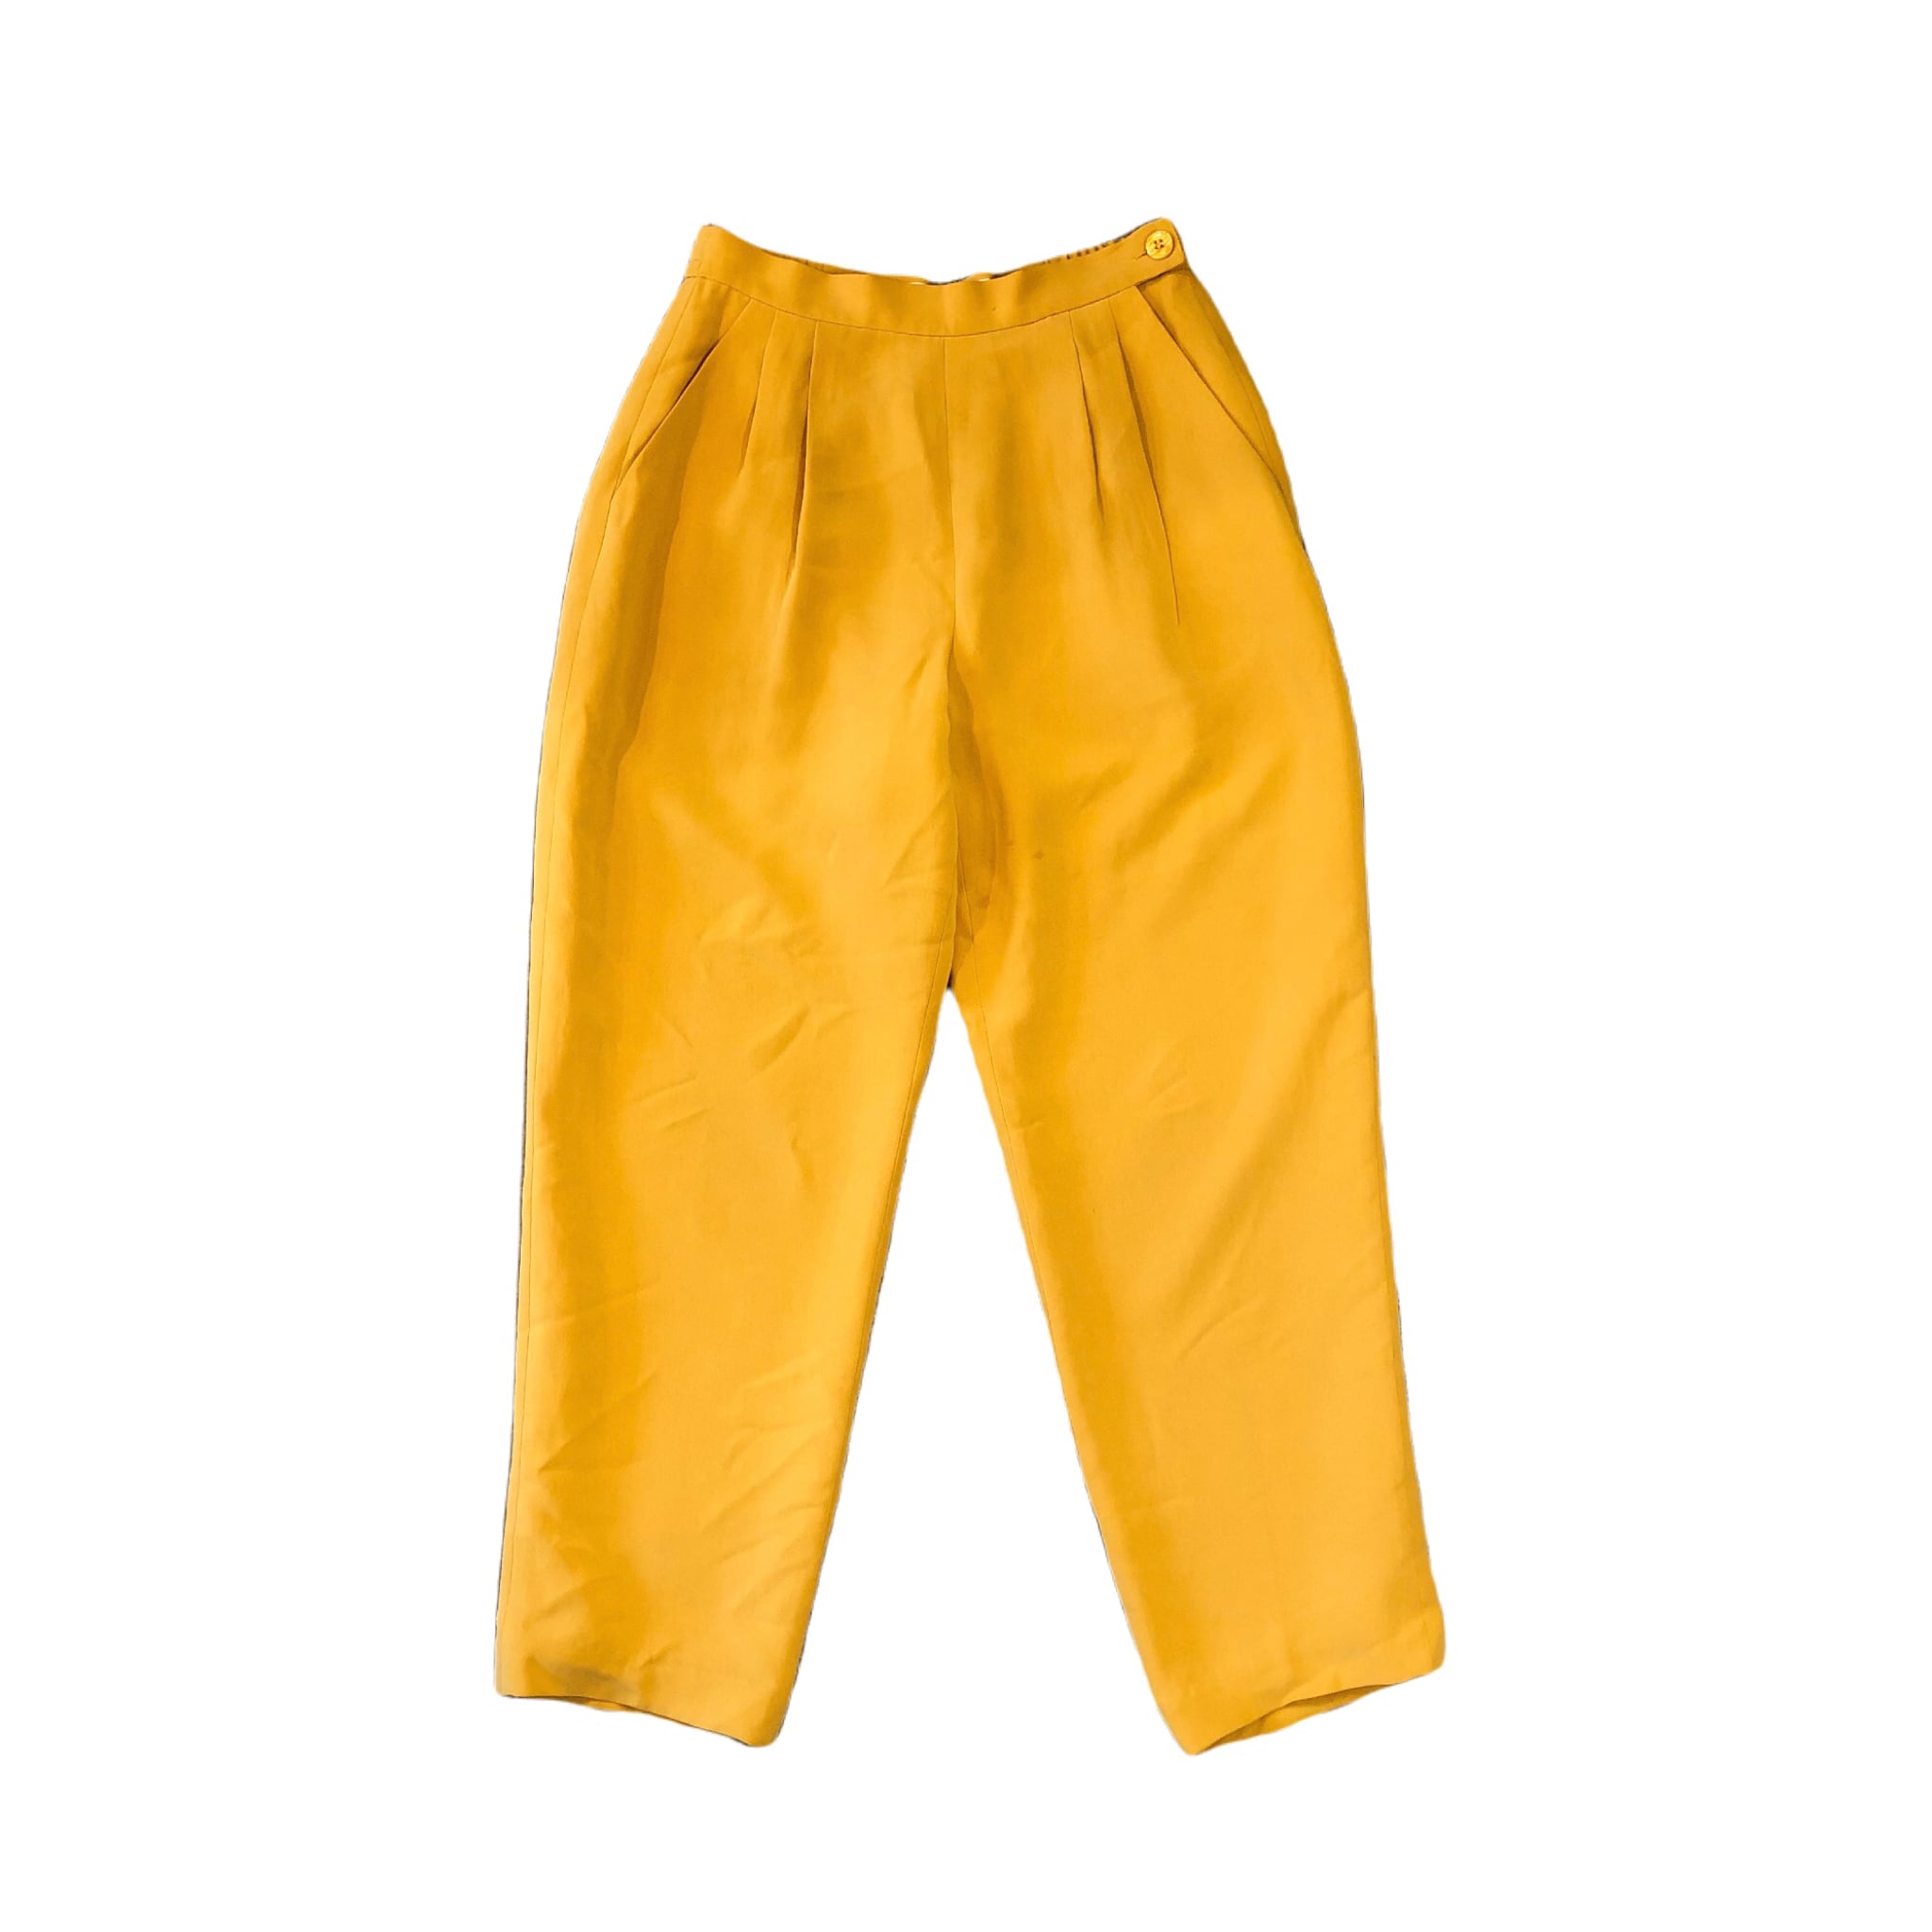 Danabuchman Yellow Pants ¥6,600+tax